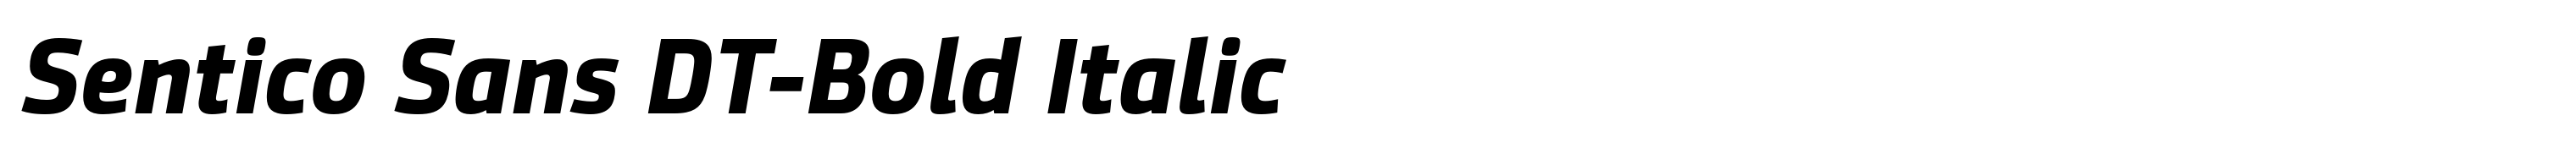 Sentico Sans DT-Bold Italic